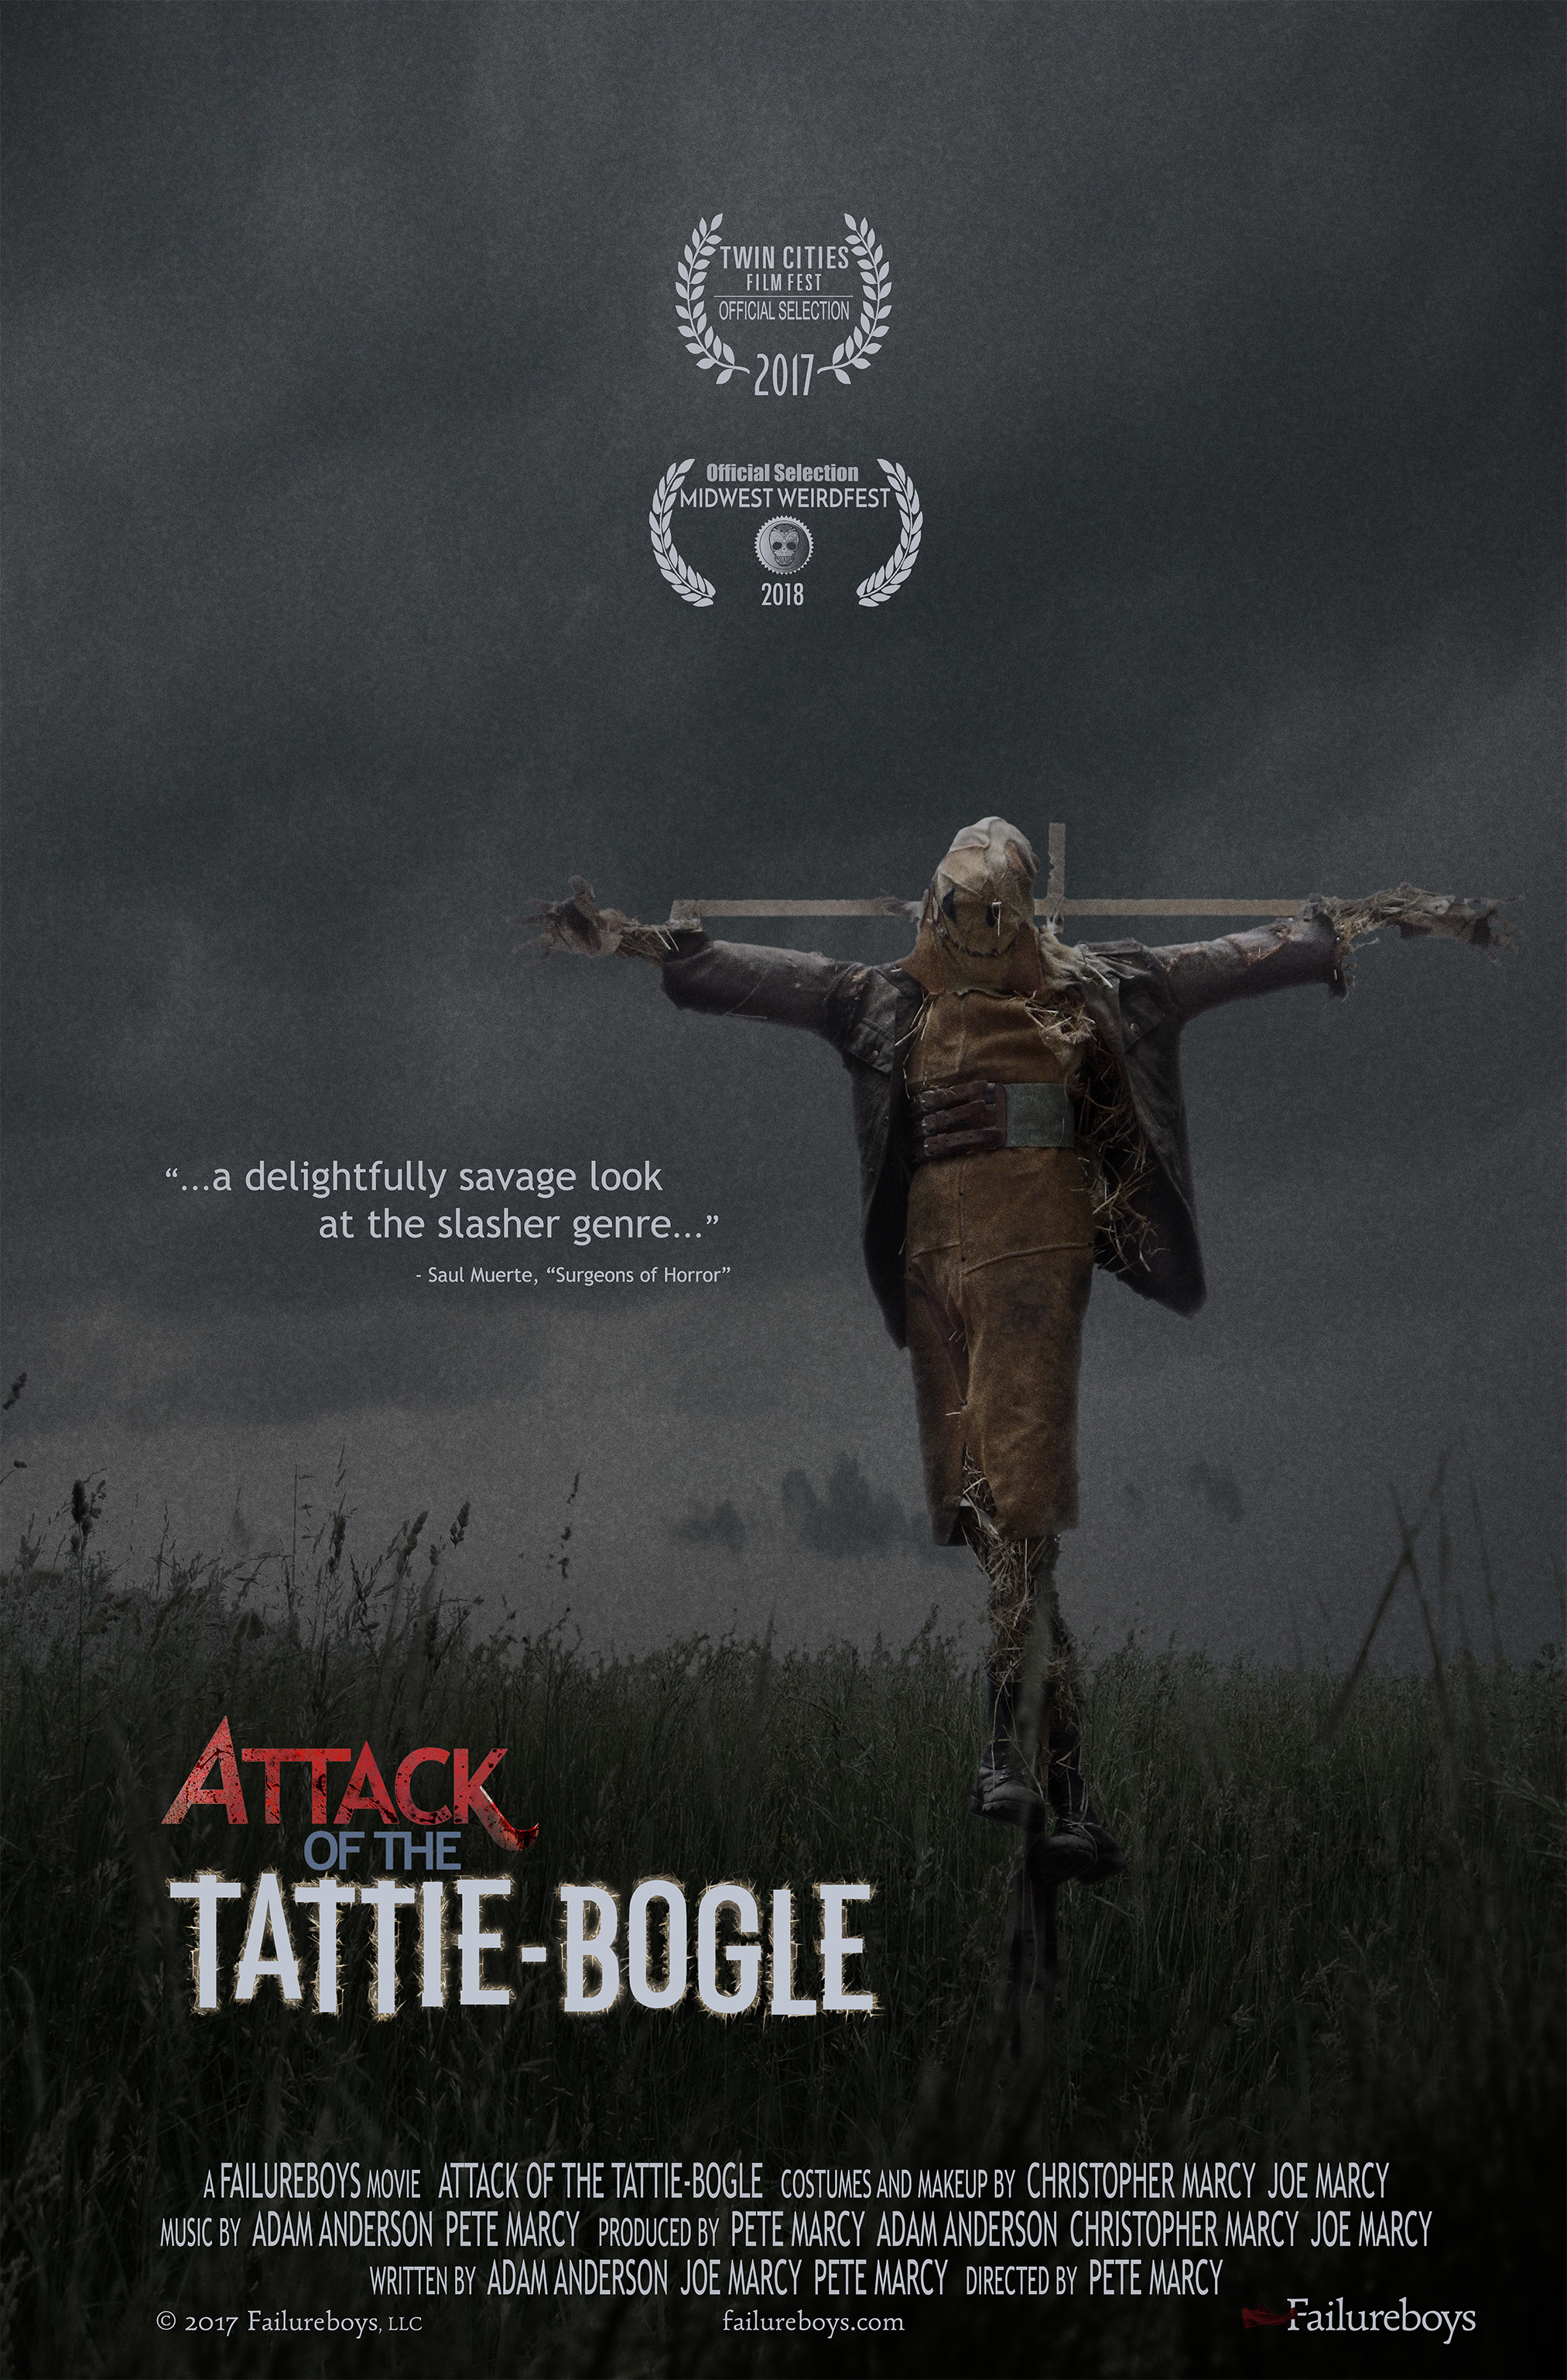 Nonton film Attack of the Tattie-Bogle layarkaca21 indoxx1 ganool online streaming terbaru